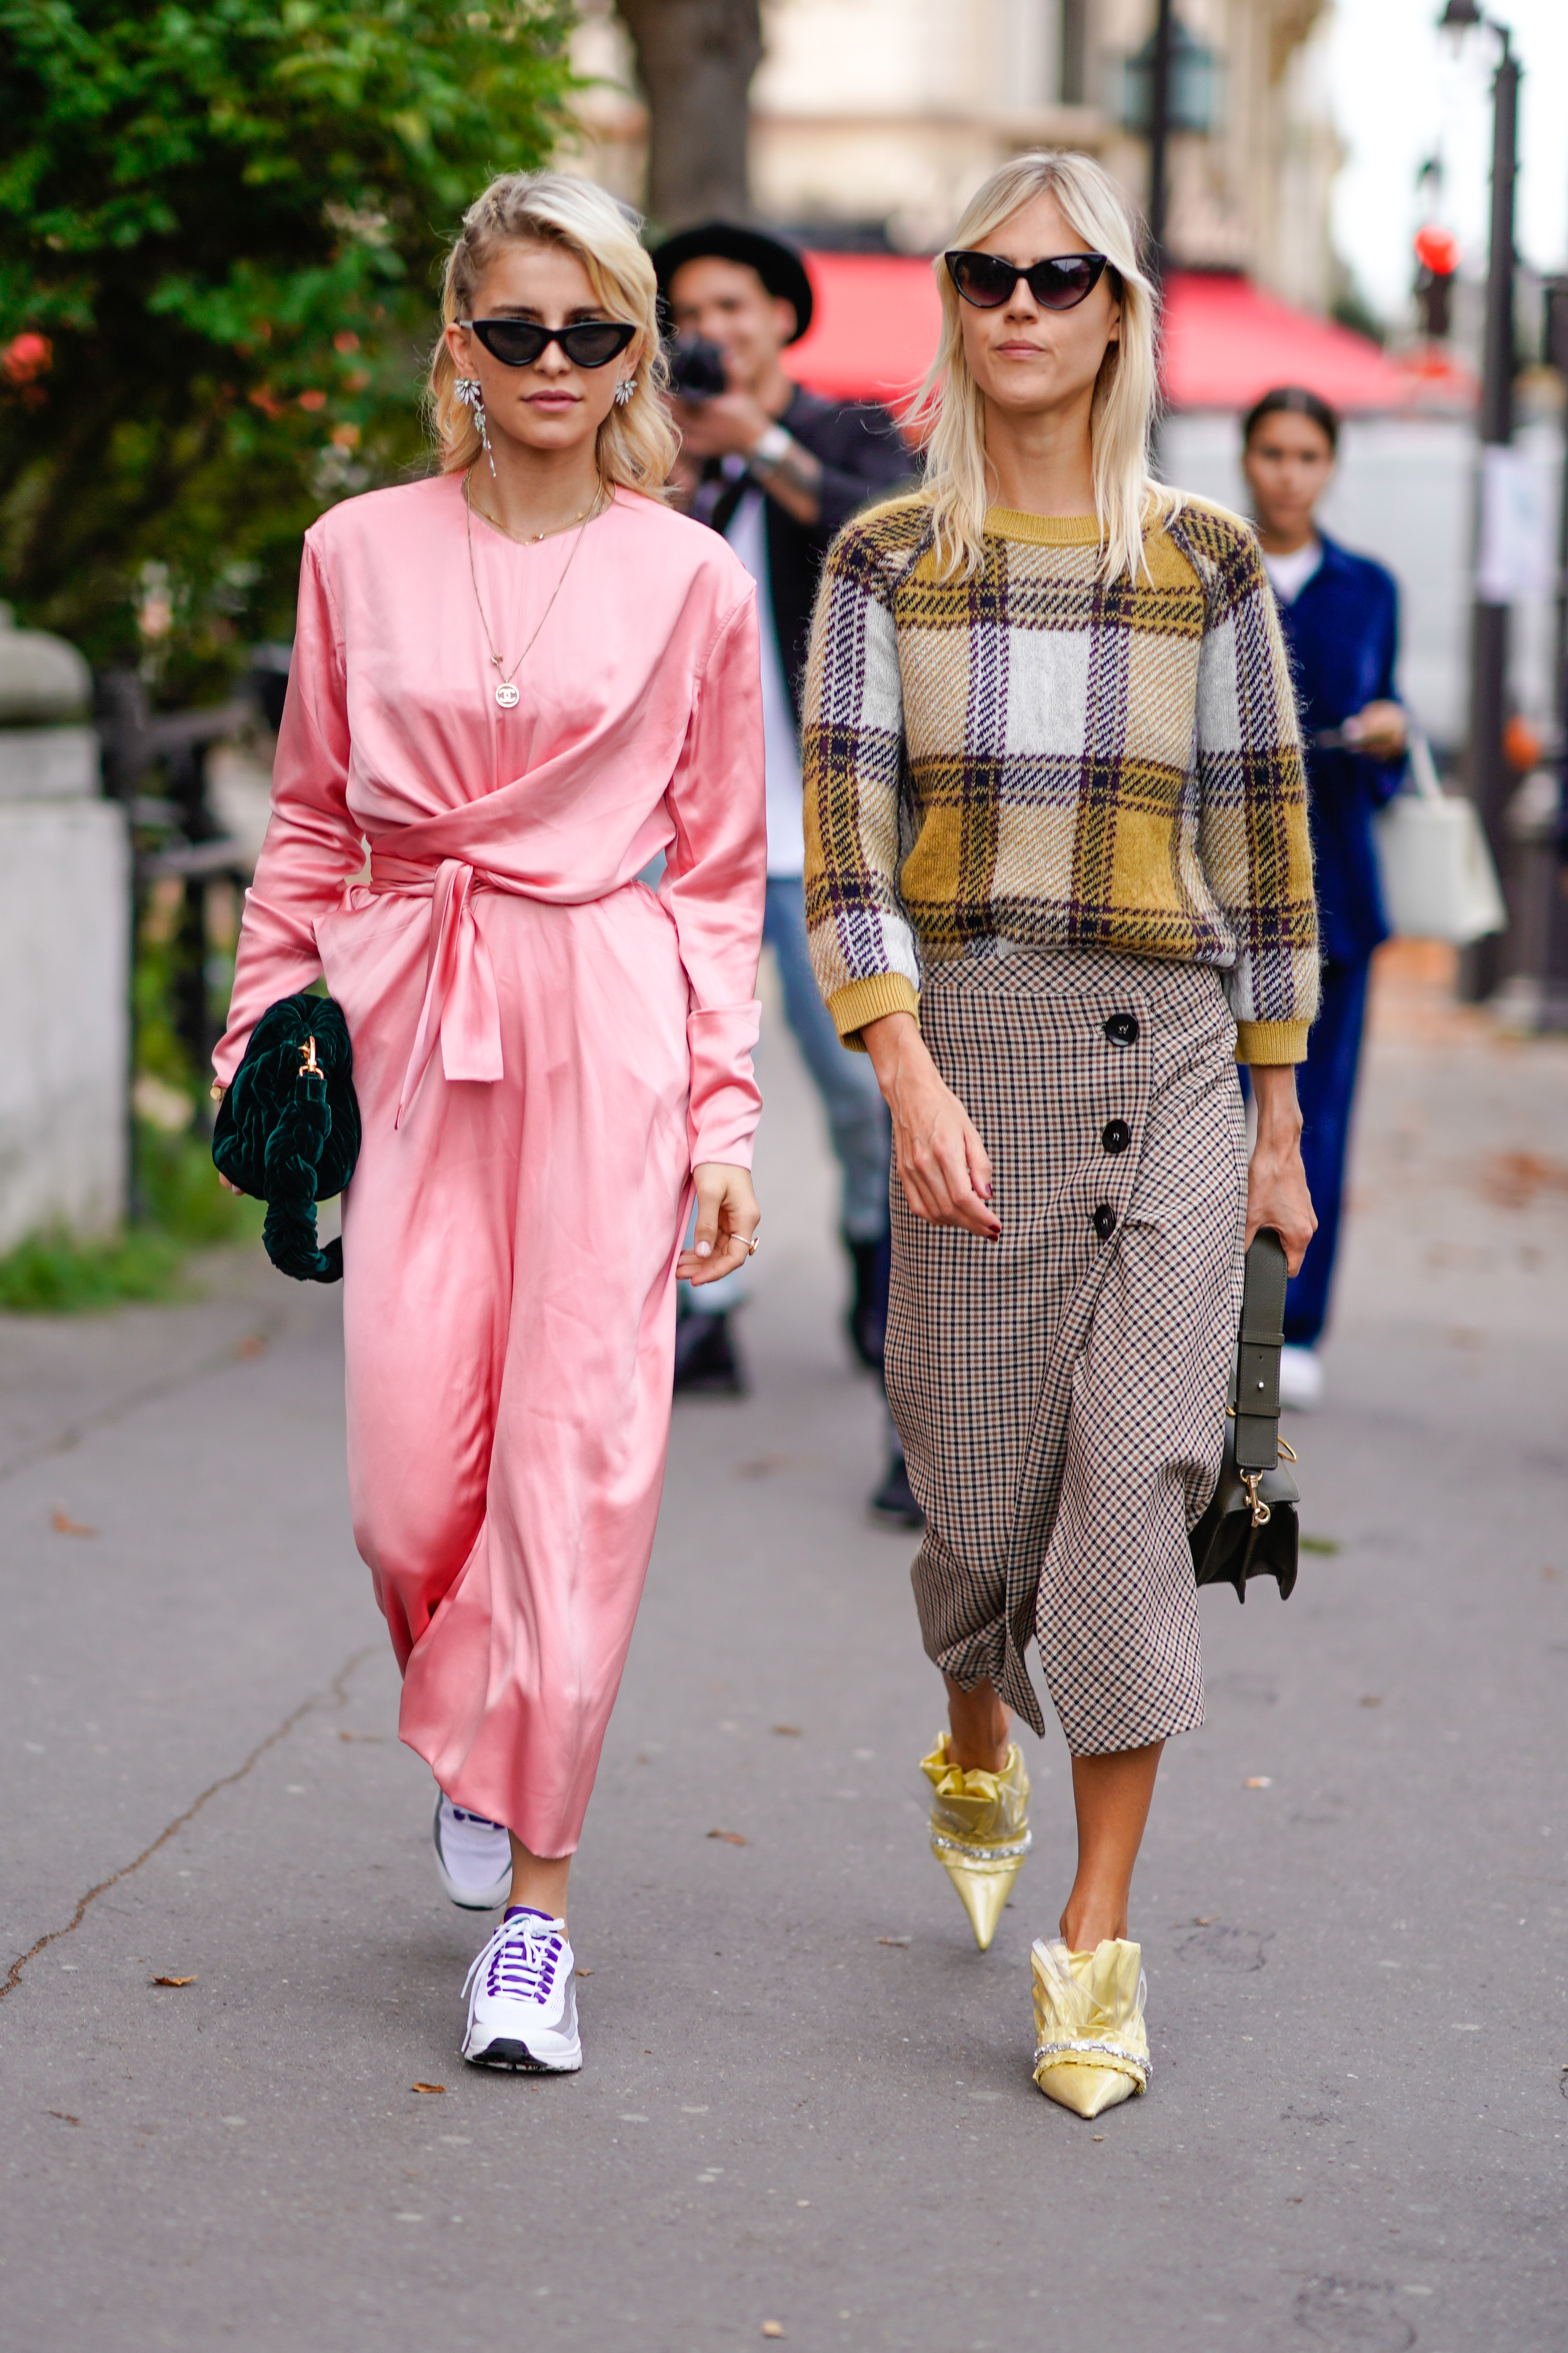 PARIS, FRANCE - SEPTEMBER 29: Caroline Daur and Linda Tol, outside Issey Miyake, during Paris Fashion Week Womenswear Spring/Summer 2018, on September 29, 2017 in Paris, France. (Photo by Edward Berthelot/Getty Images)